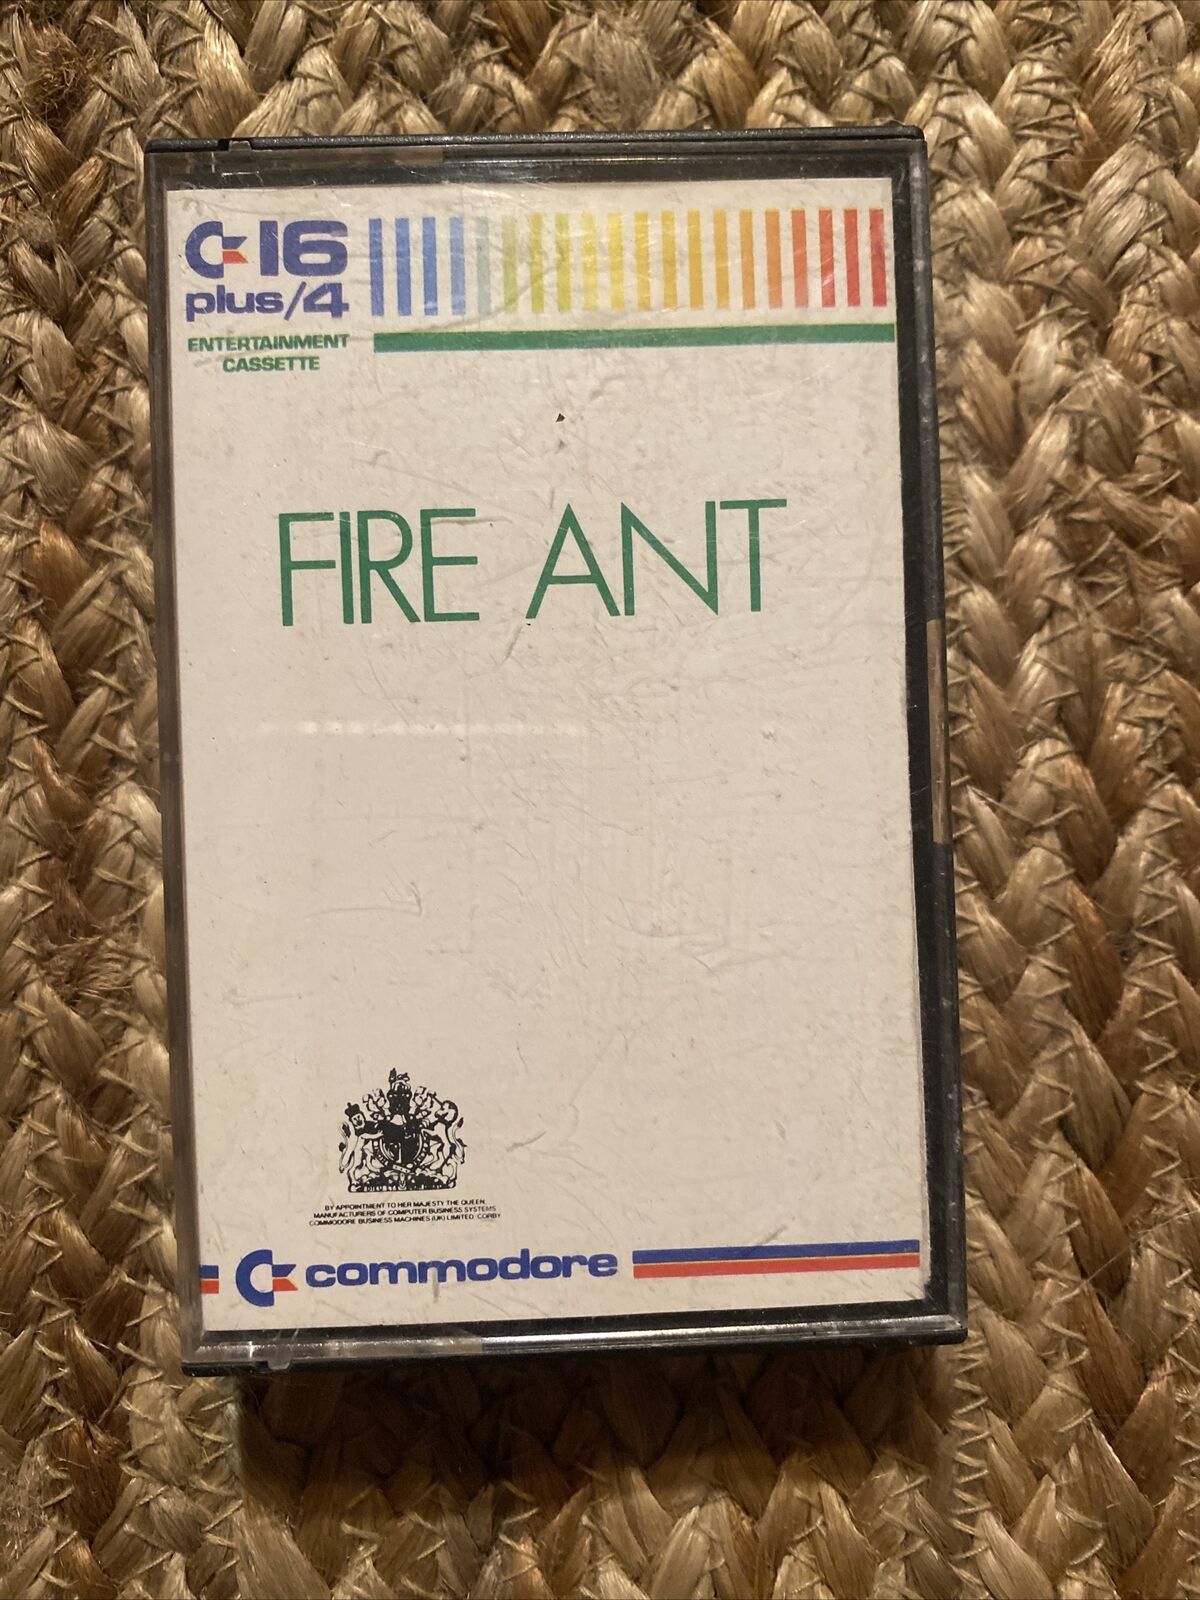 Fire Ant Cassette In Case Commodore C16 Plus/4 Game